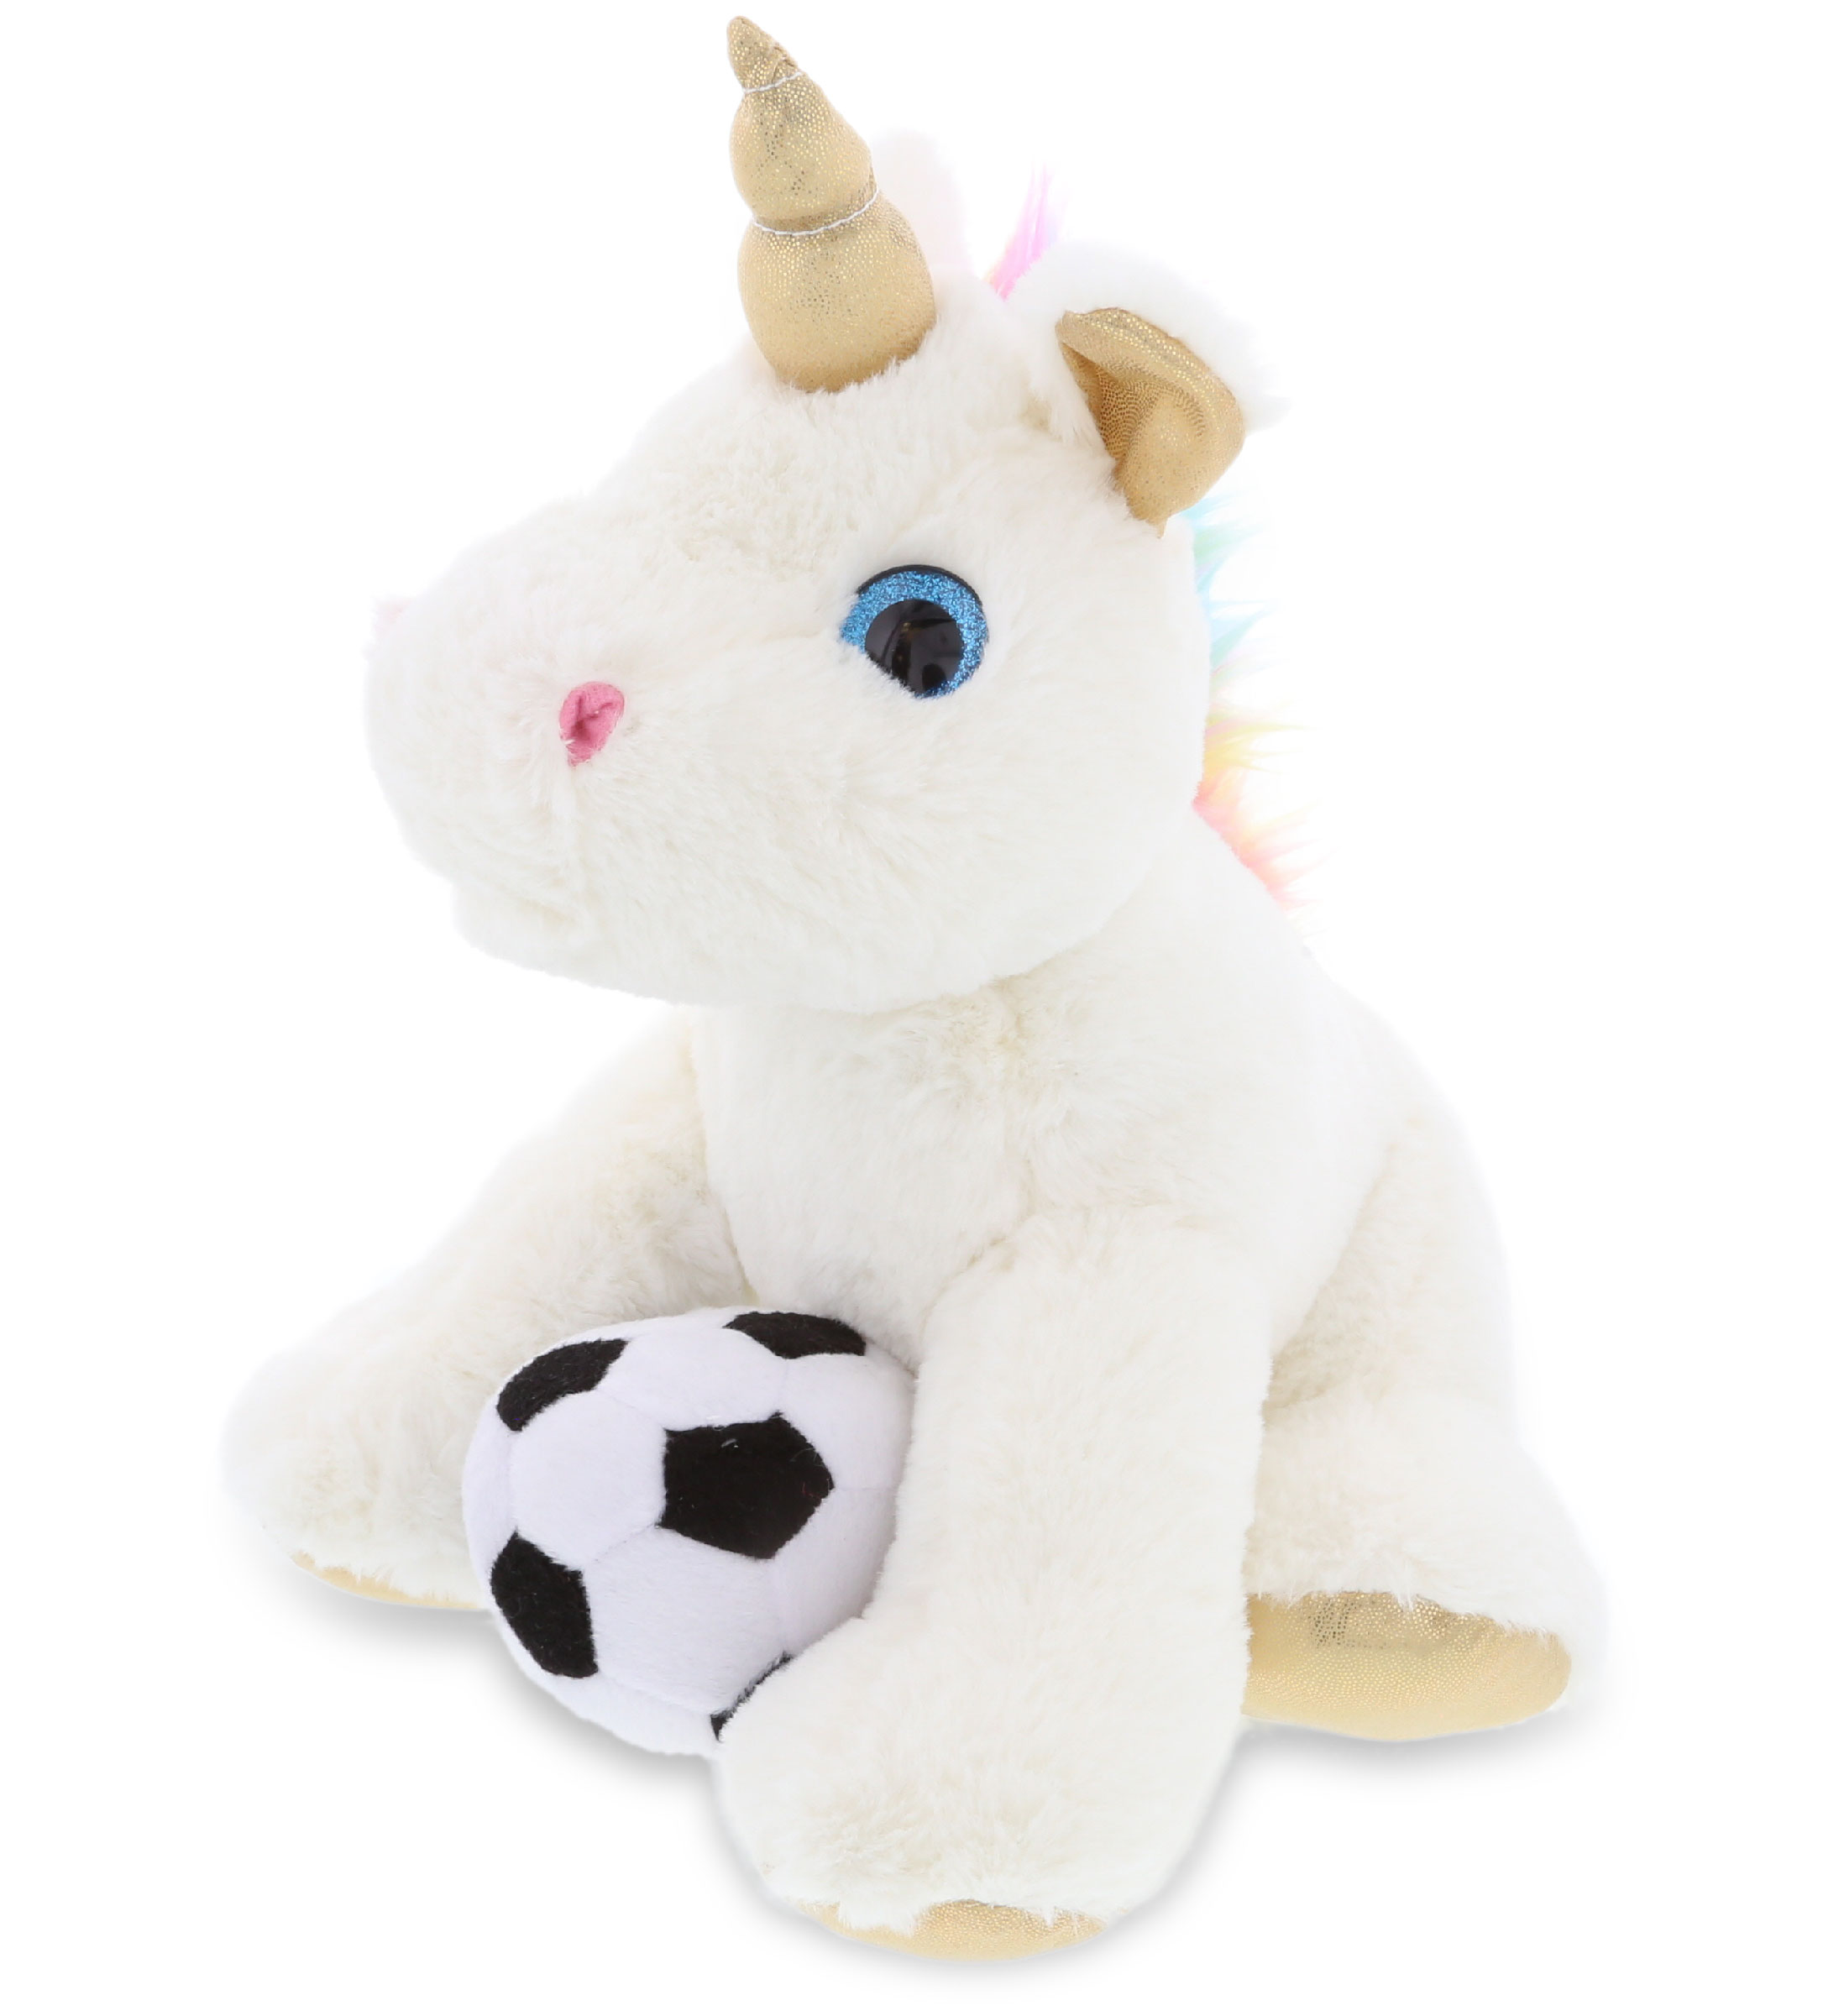 DolliBu White and Gold Unicorn Stuffed Animal with Football Plush